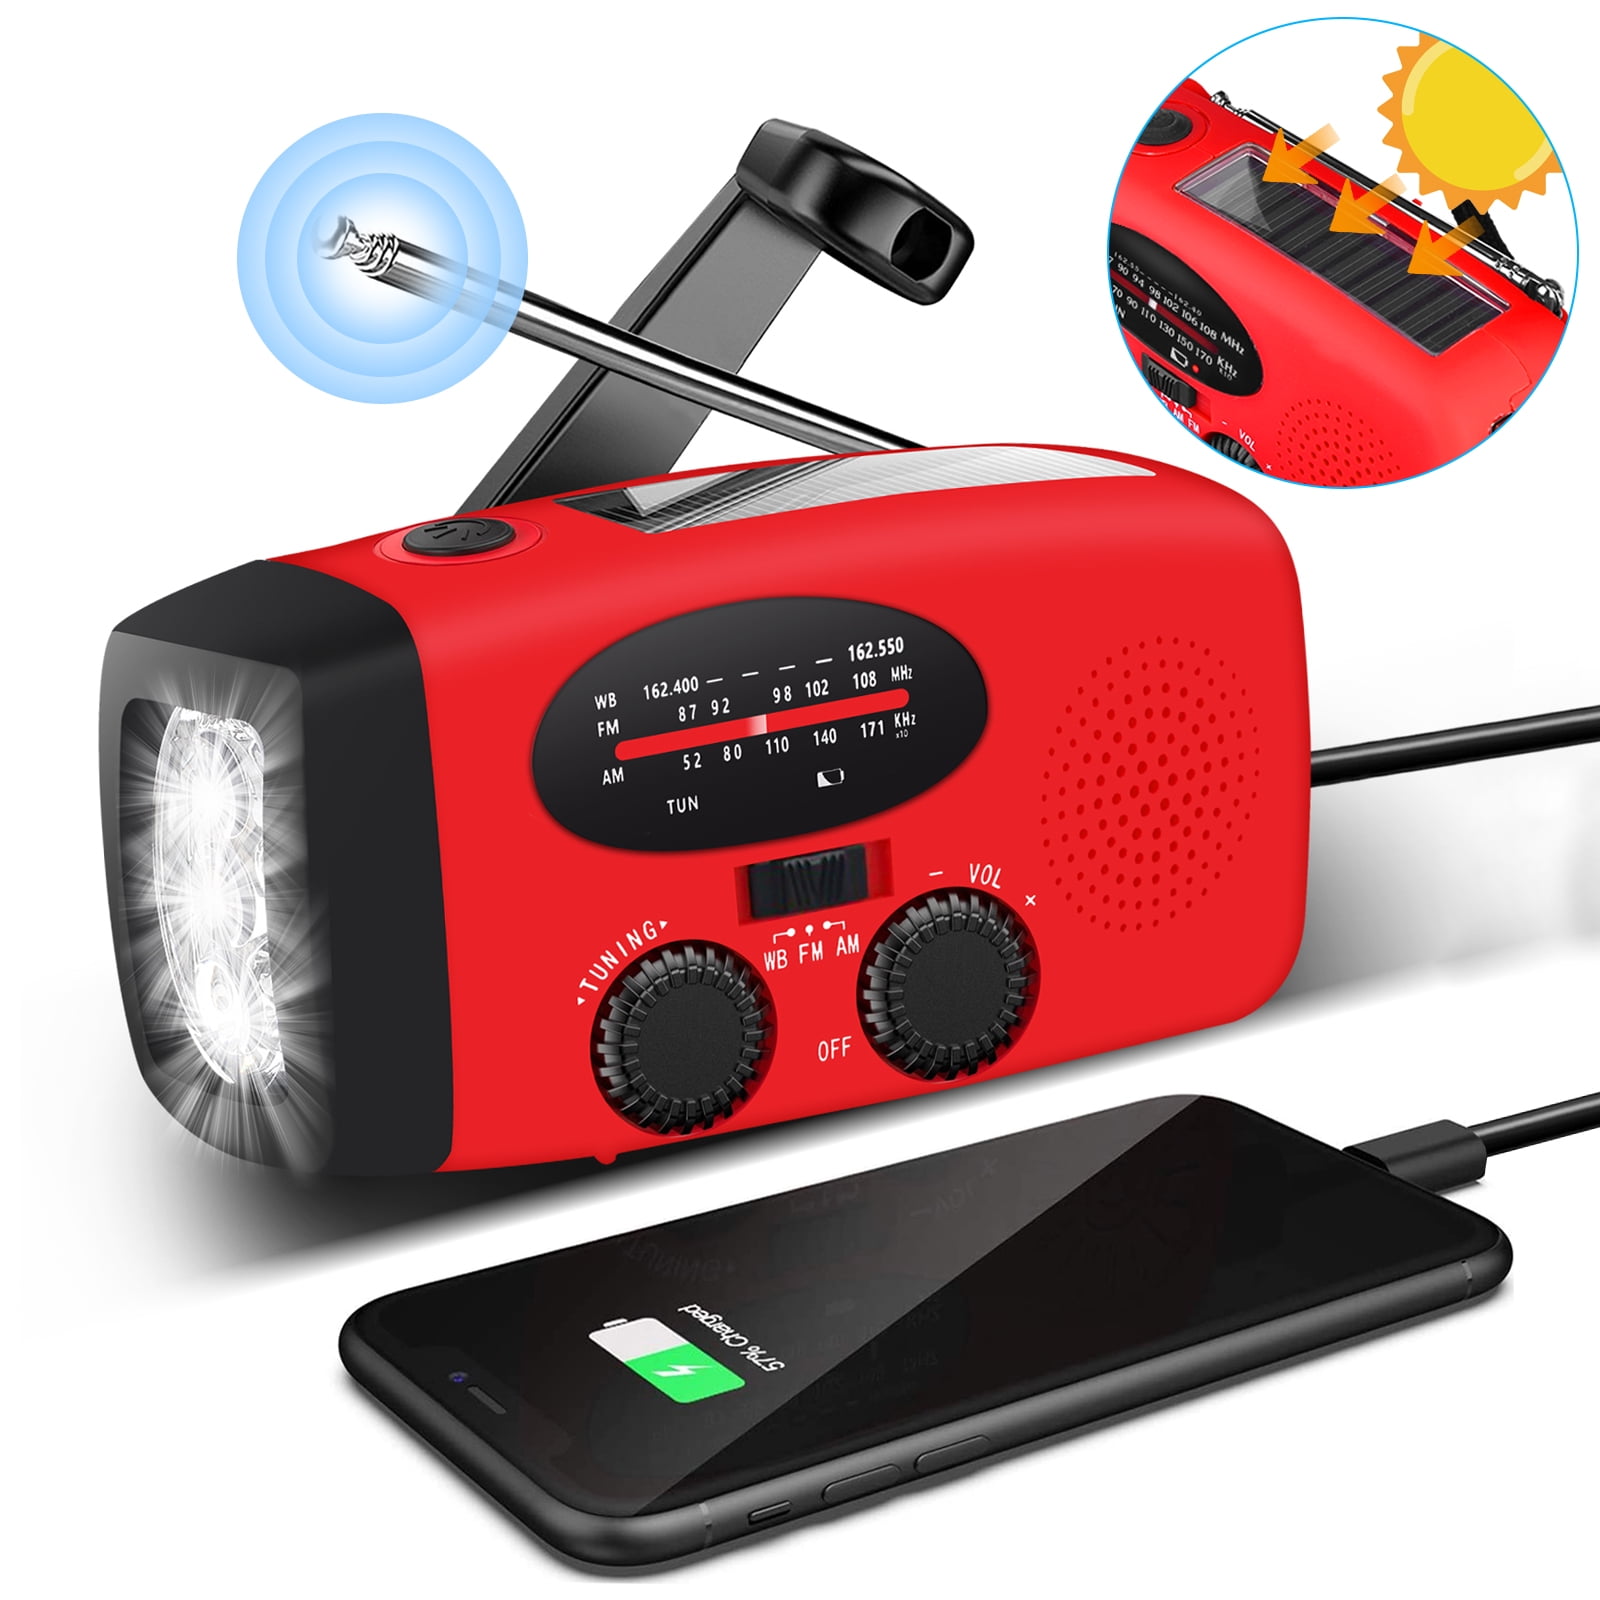 New Solar Radio Is an Emergency Kit too - Radio World